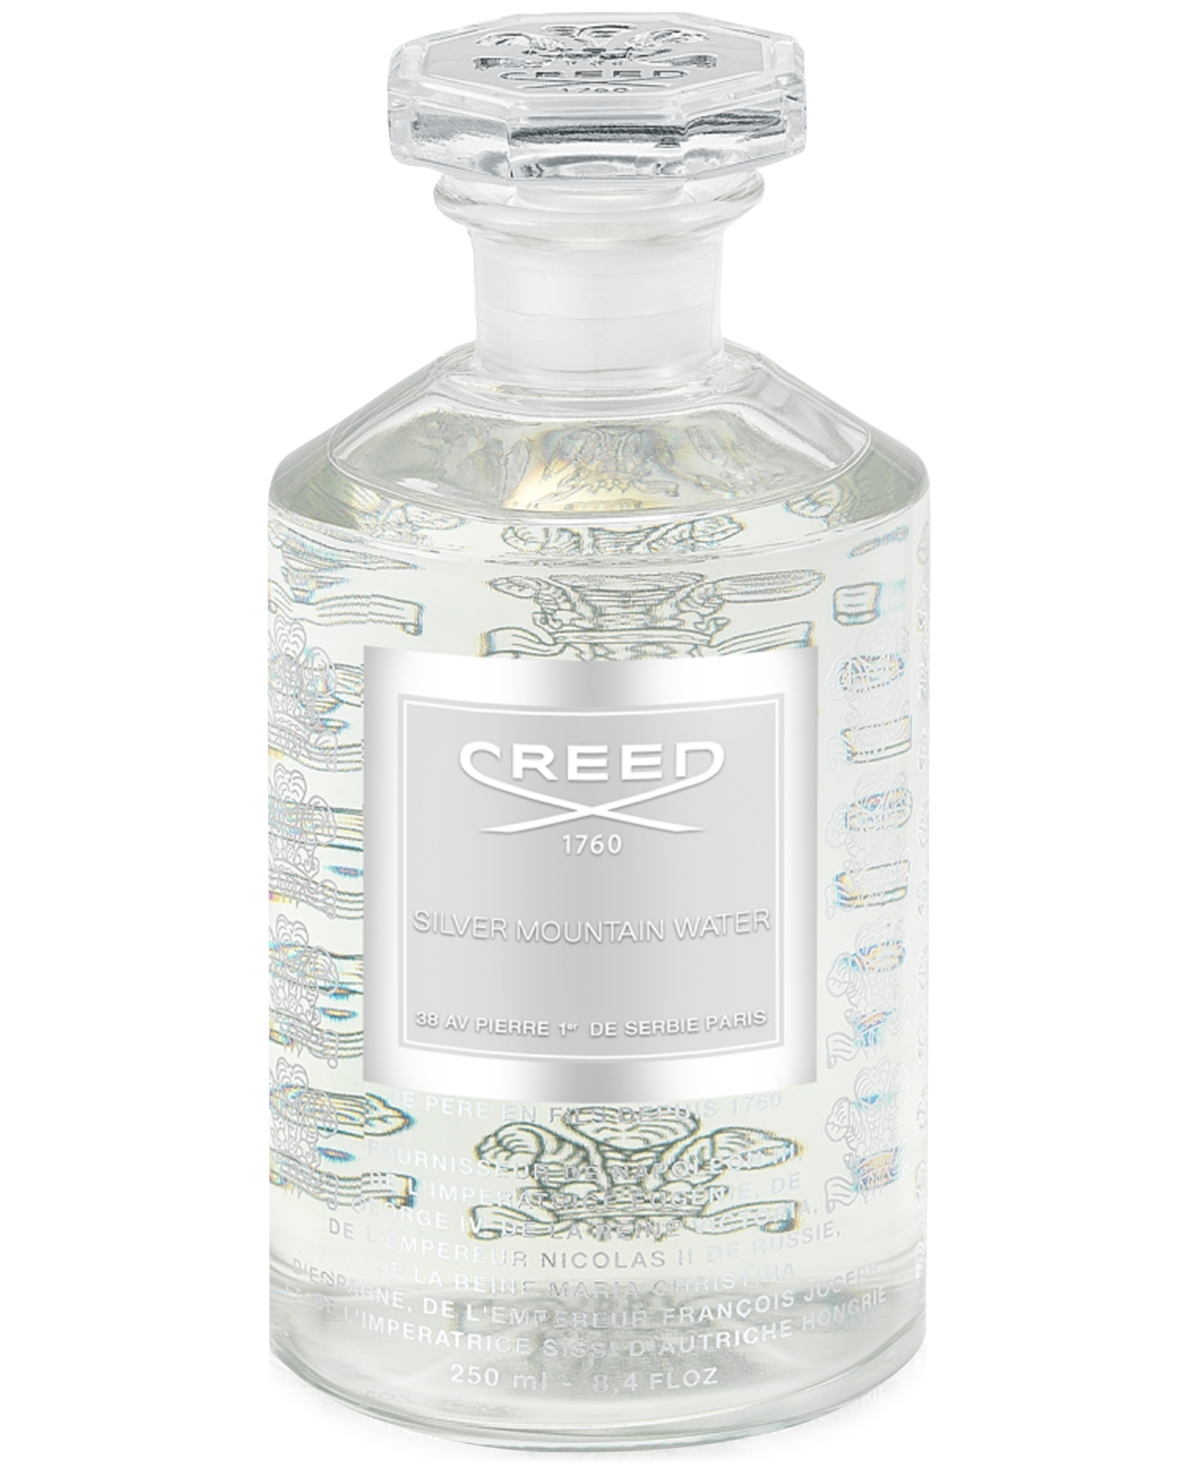 Creed Silver Mountain Water, 8.4 Oz.